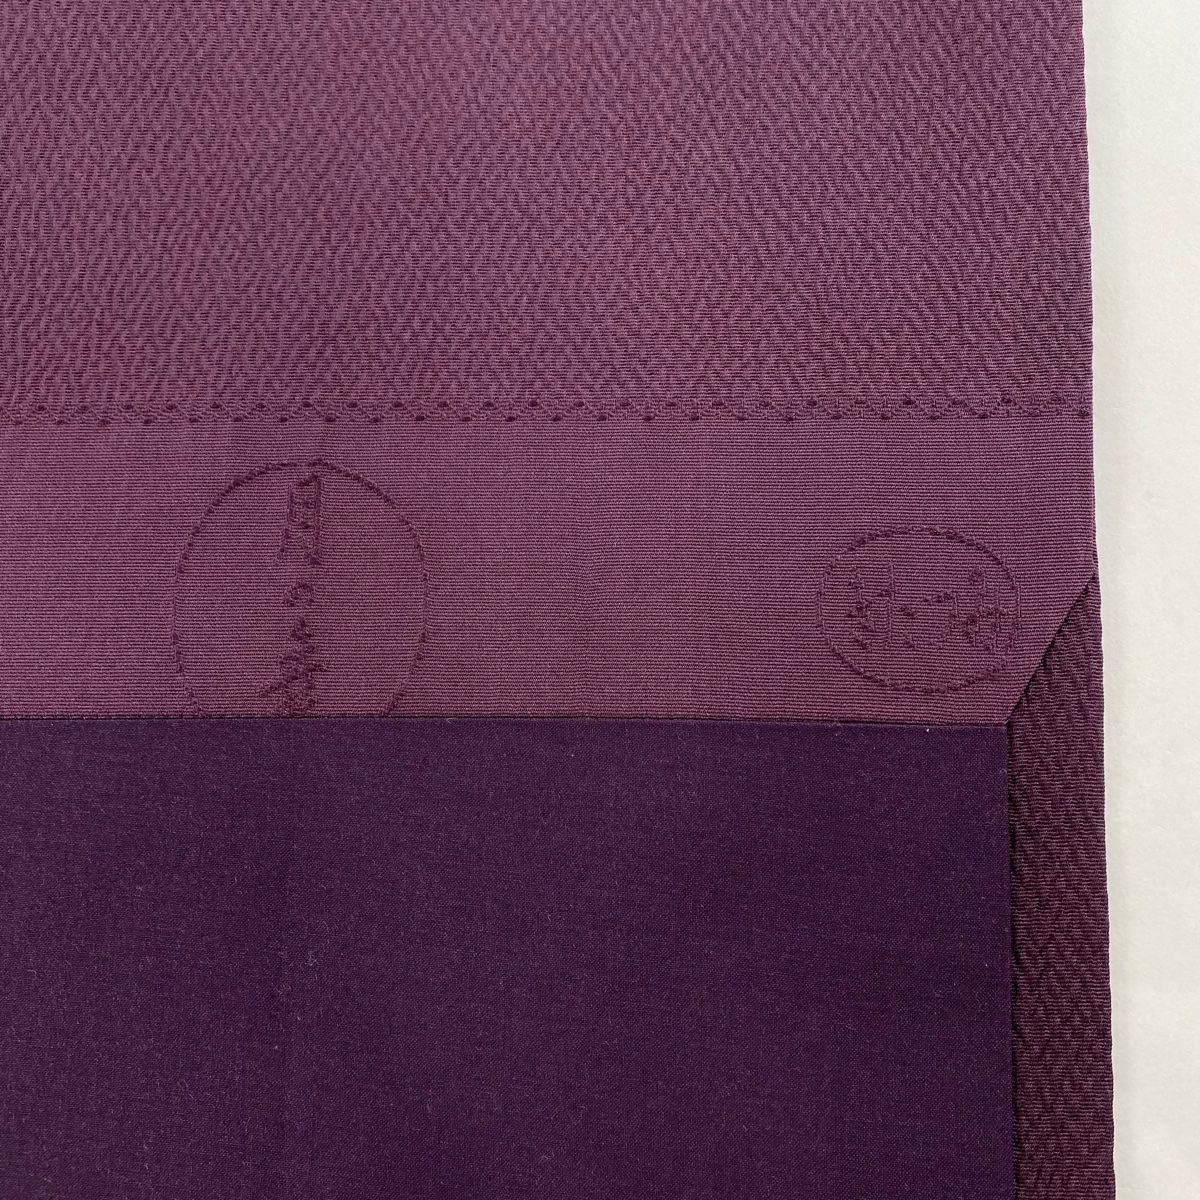 開き名古屋帯 秀品 椿 金糸 刺繍 紫 正絹 【中古】 - メルカリ